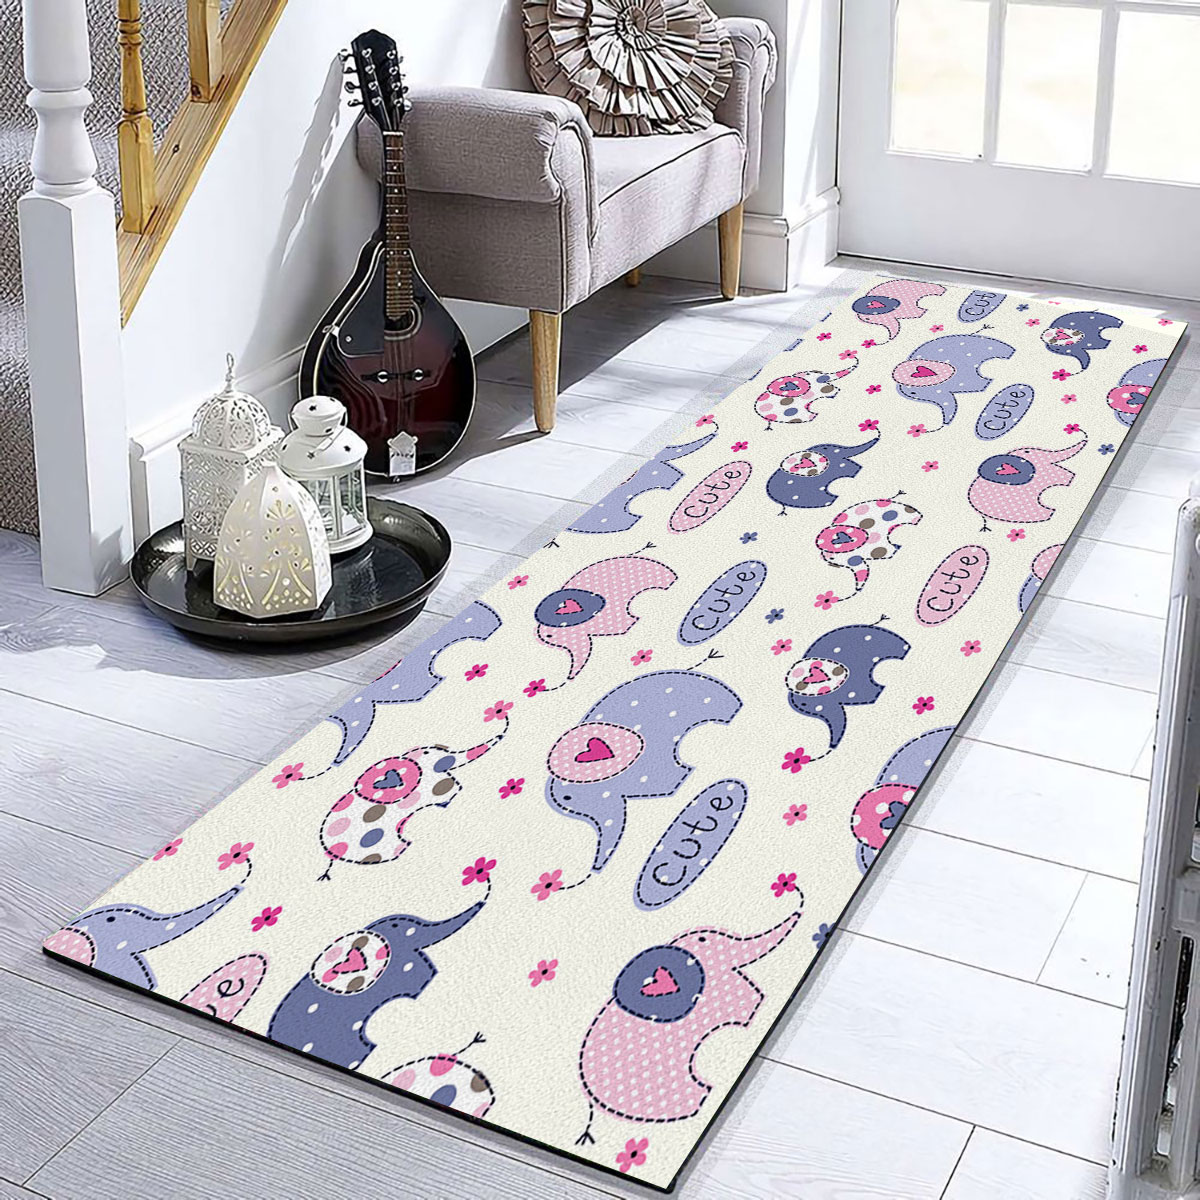 Cute Purple Asian Elephant Runner Carpet 6